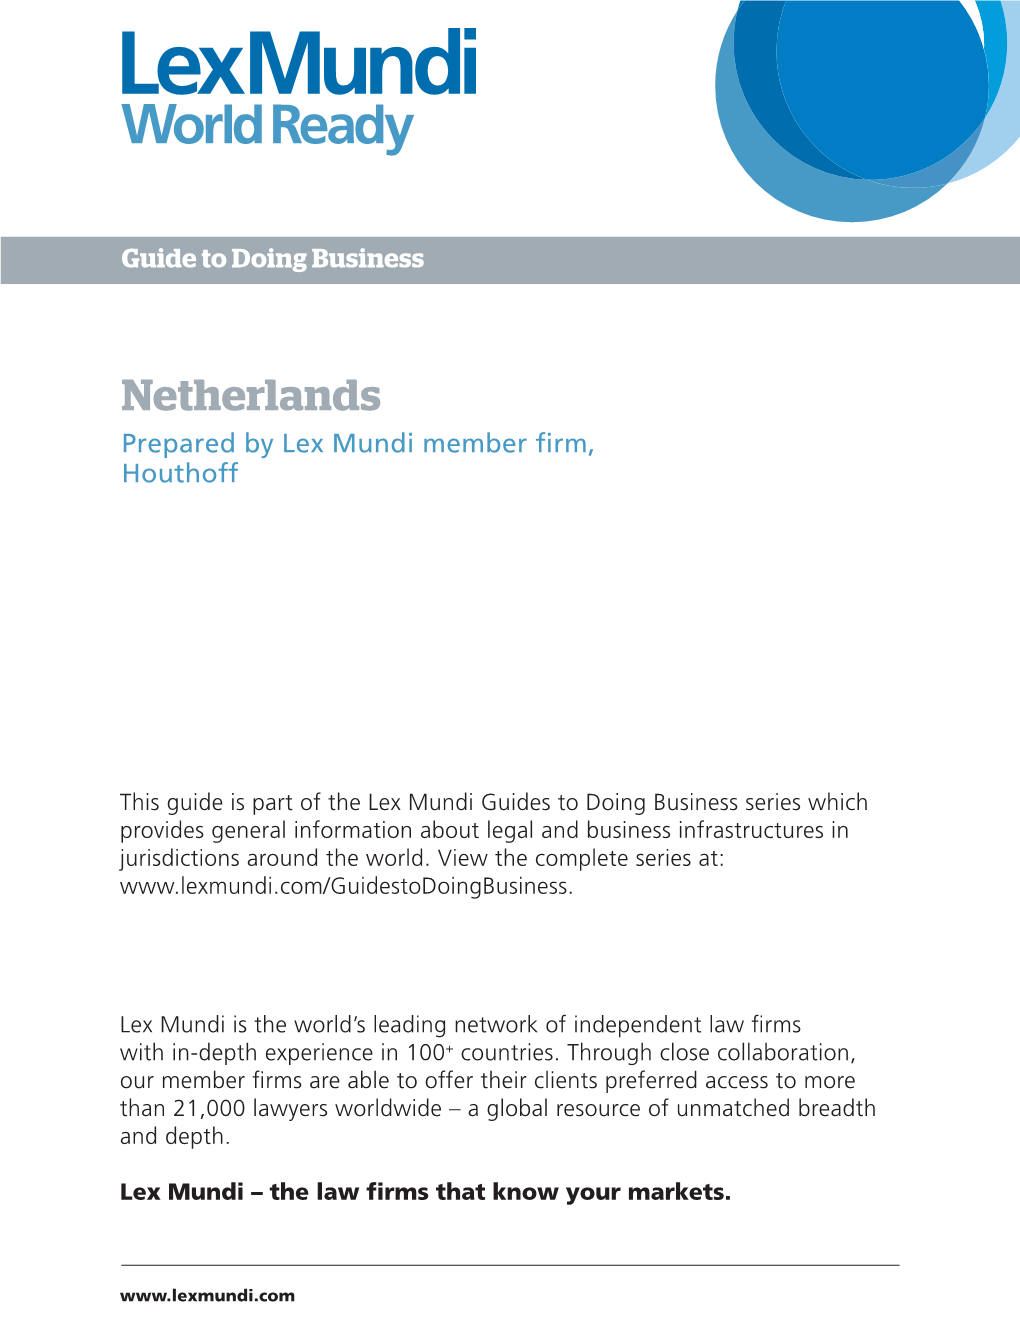 Netherlands Prepared by Lex Mundi Member Firm, Houthoff